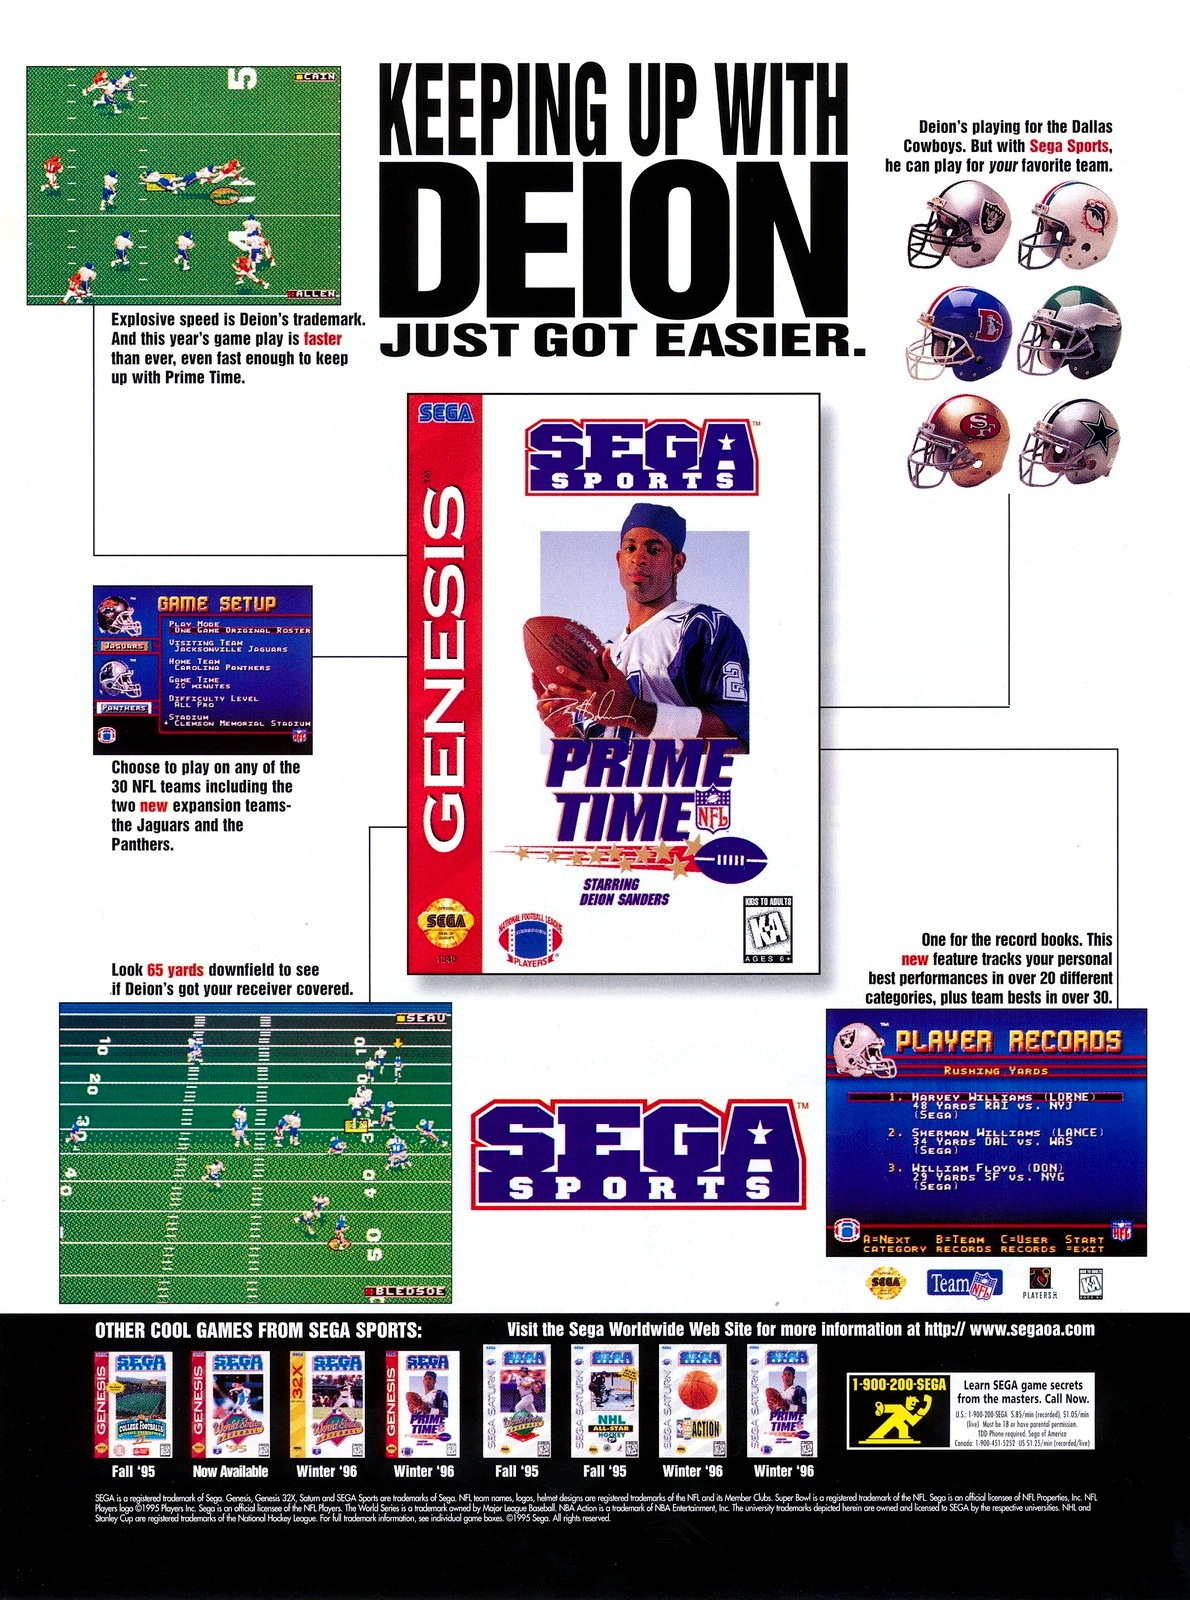 Prime Time NFL Starring Deion Sanders Images LaunchBox Games Database